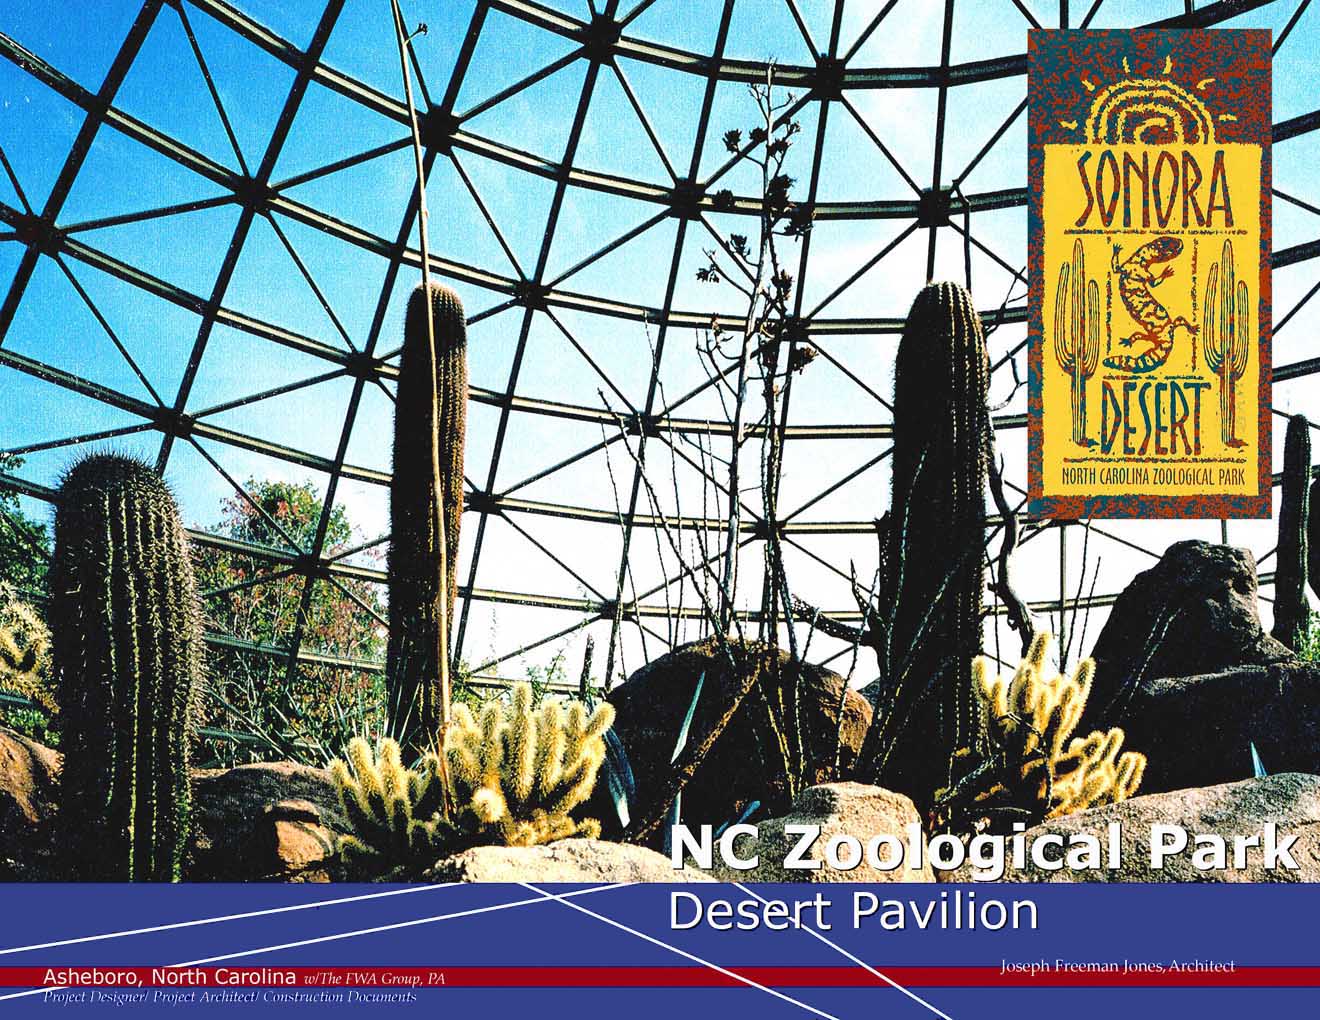 NC Zoo Desert Pavilion